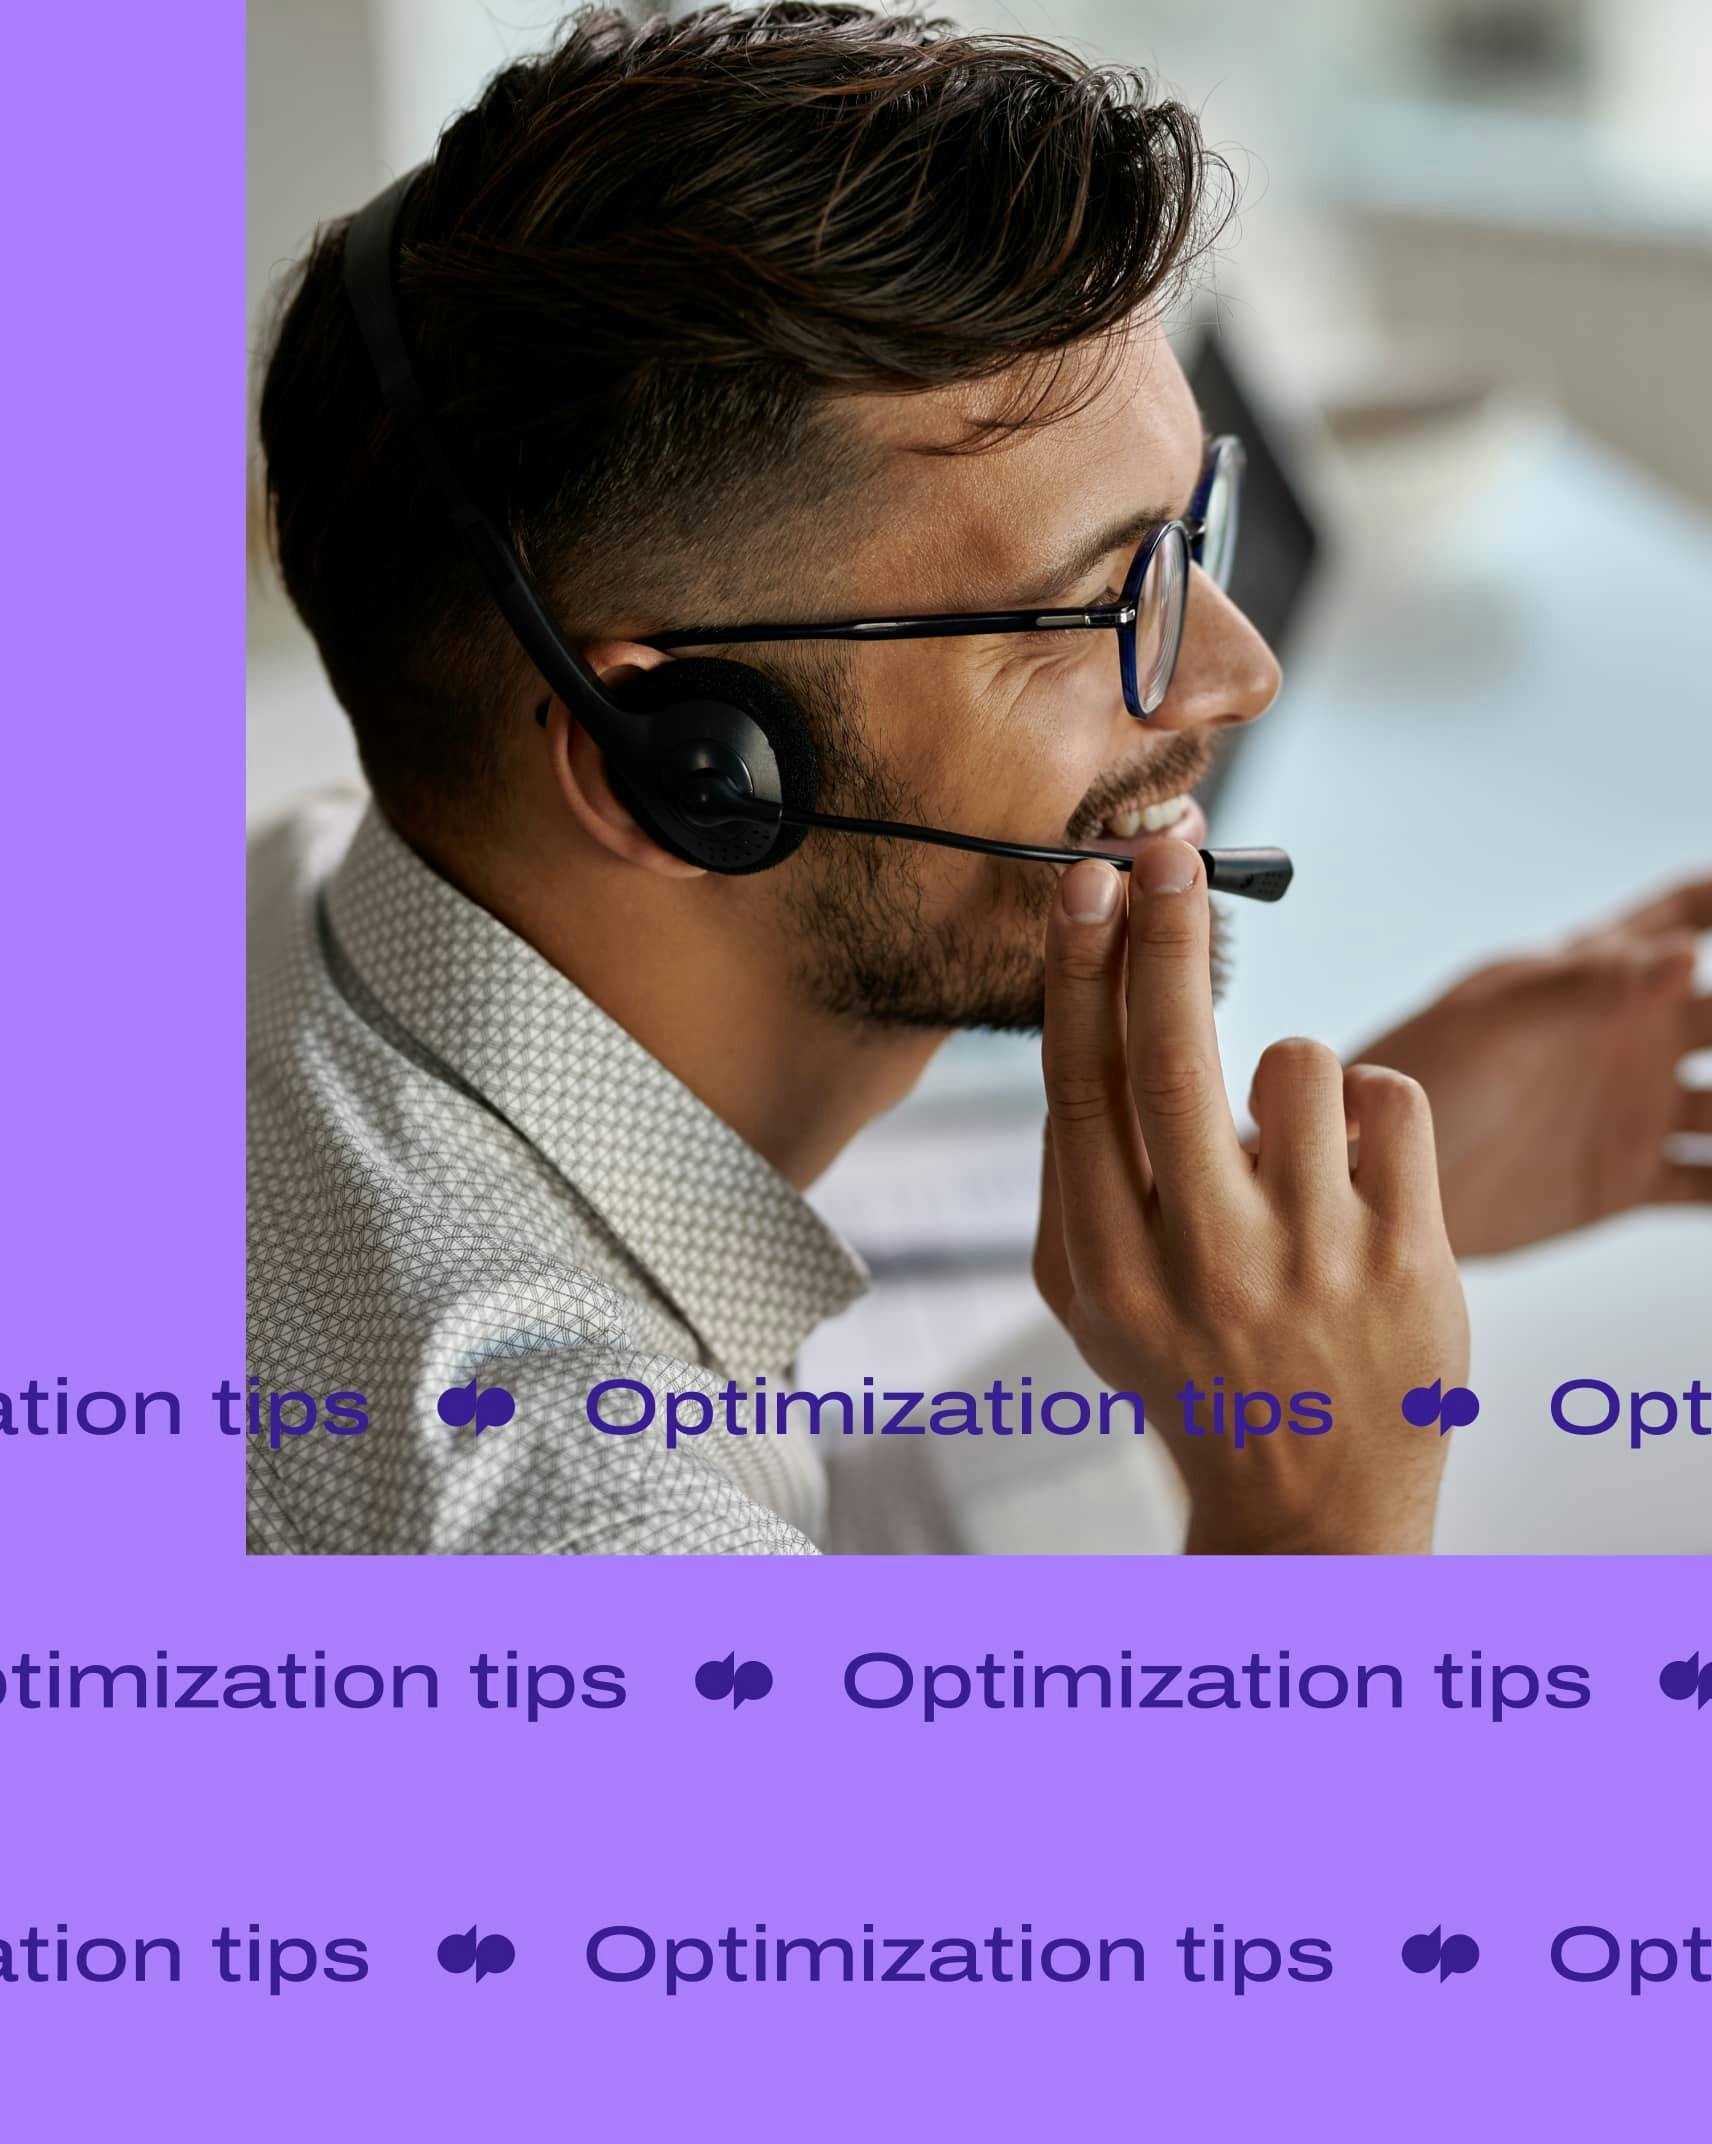 Optimization tips